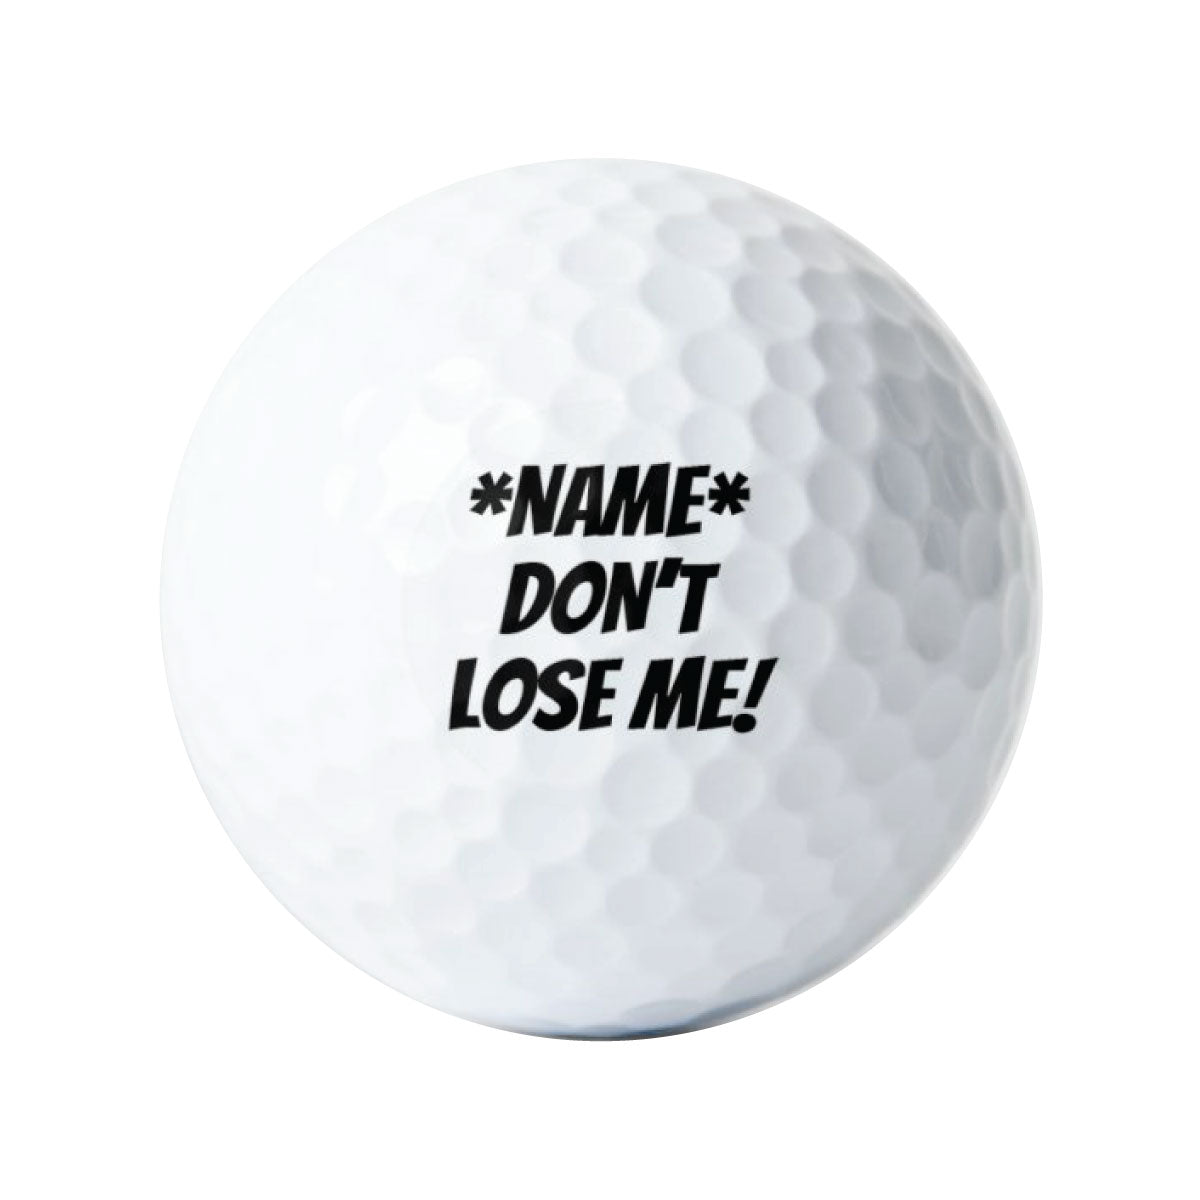 Don't Lose Me Custom Name Golf Balls with Custom Name, 3-Pack Printed White Golf Balls